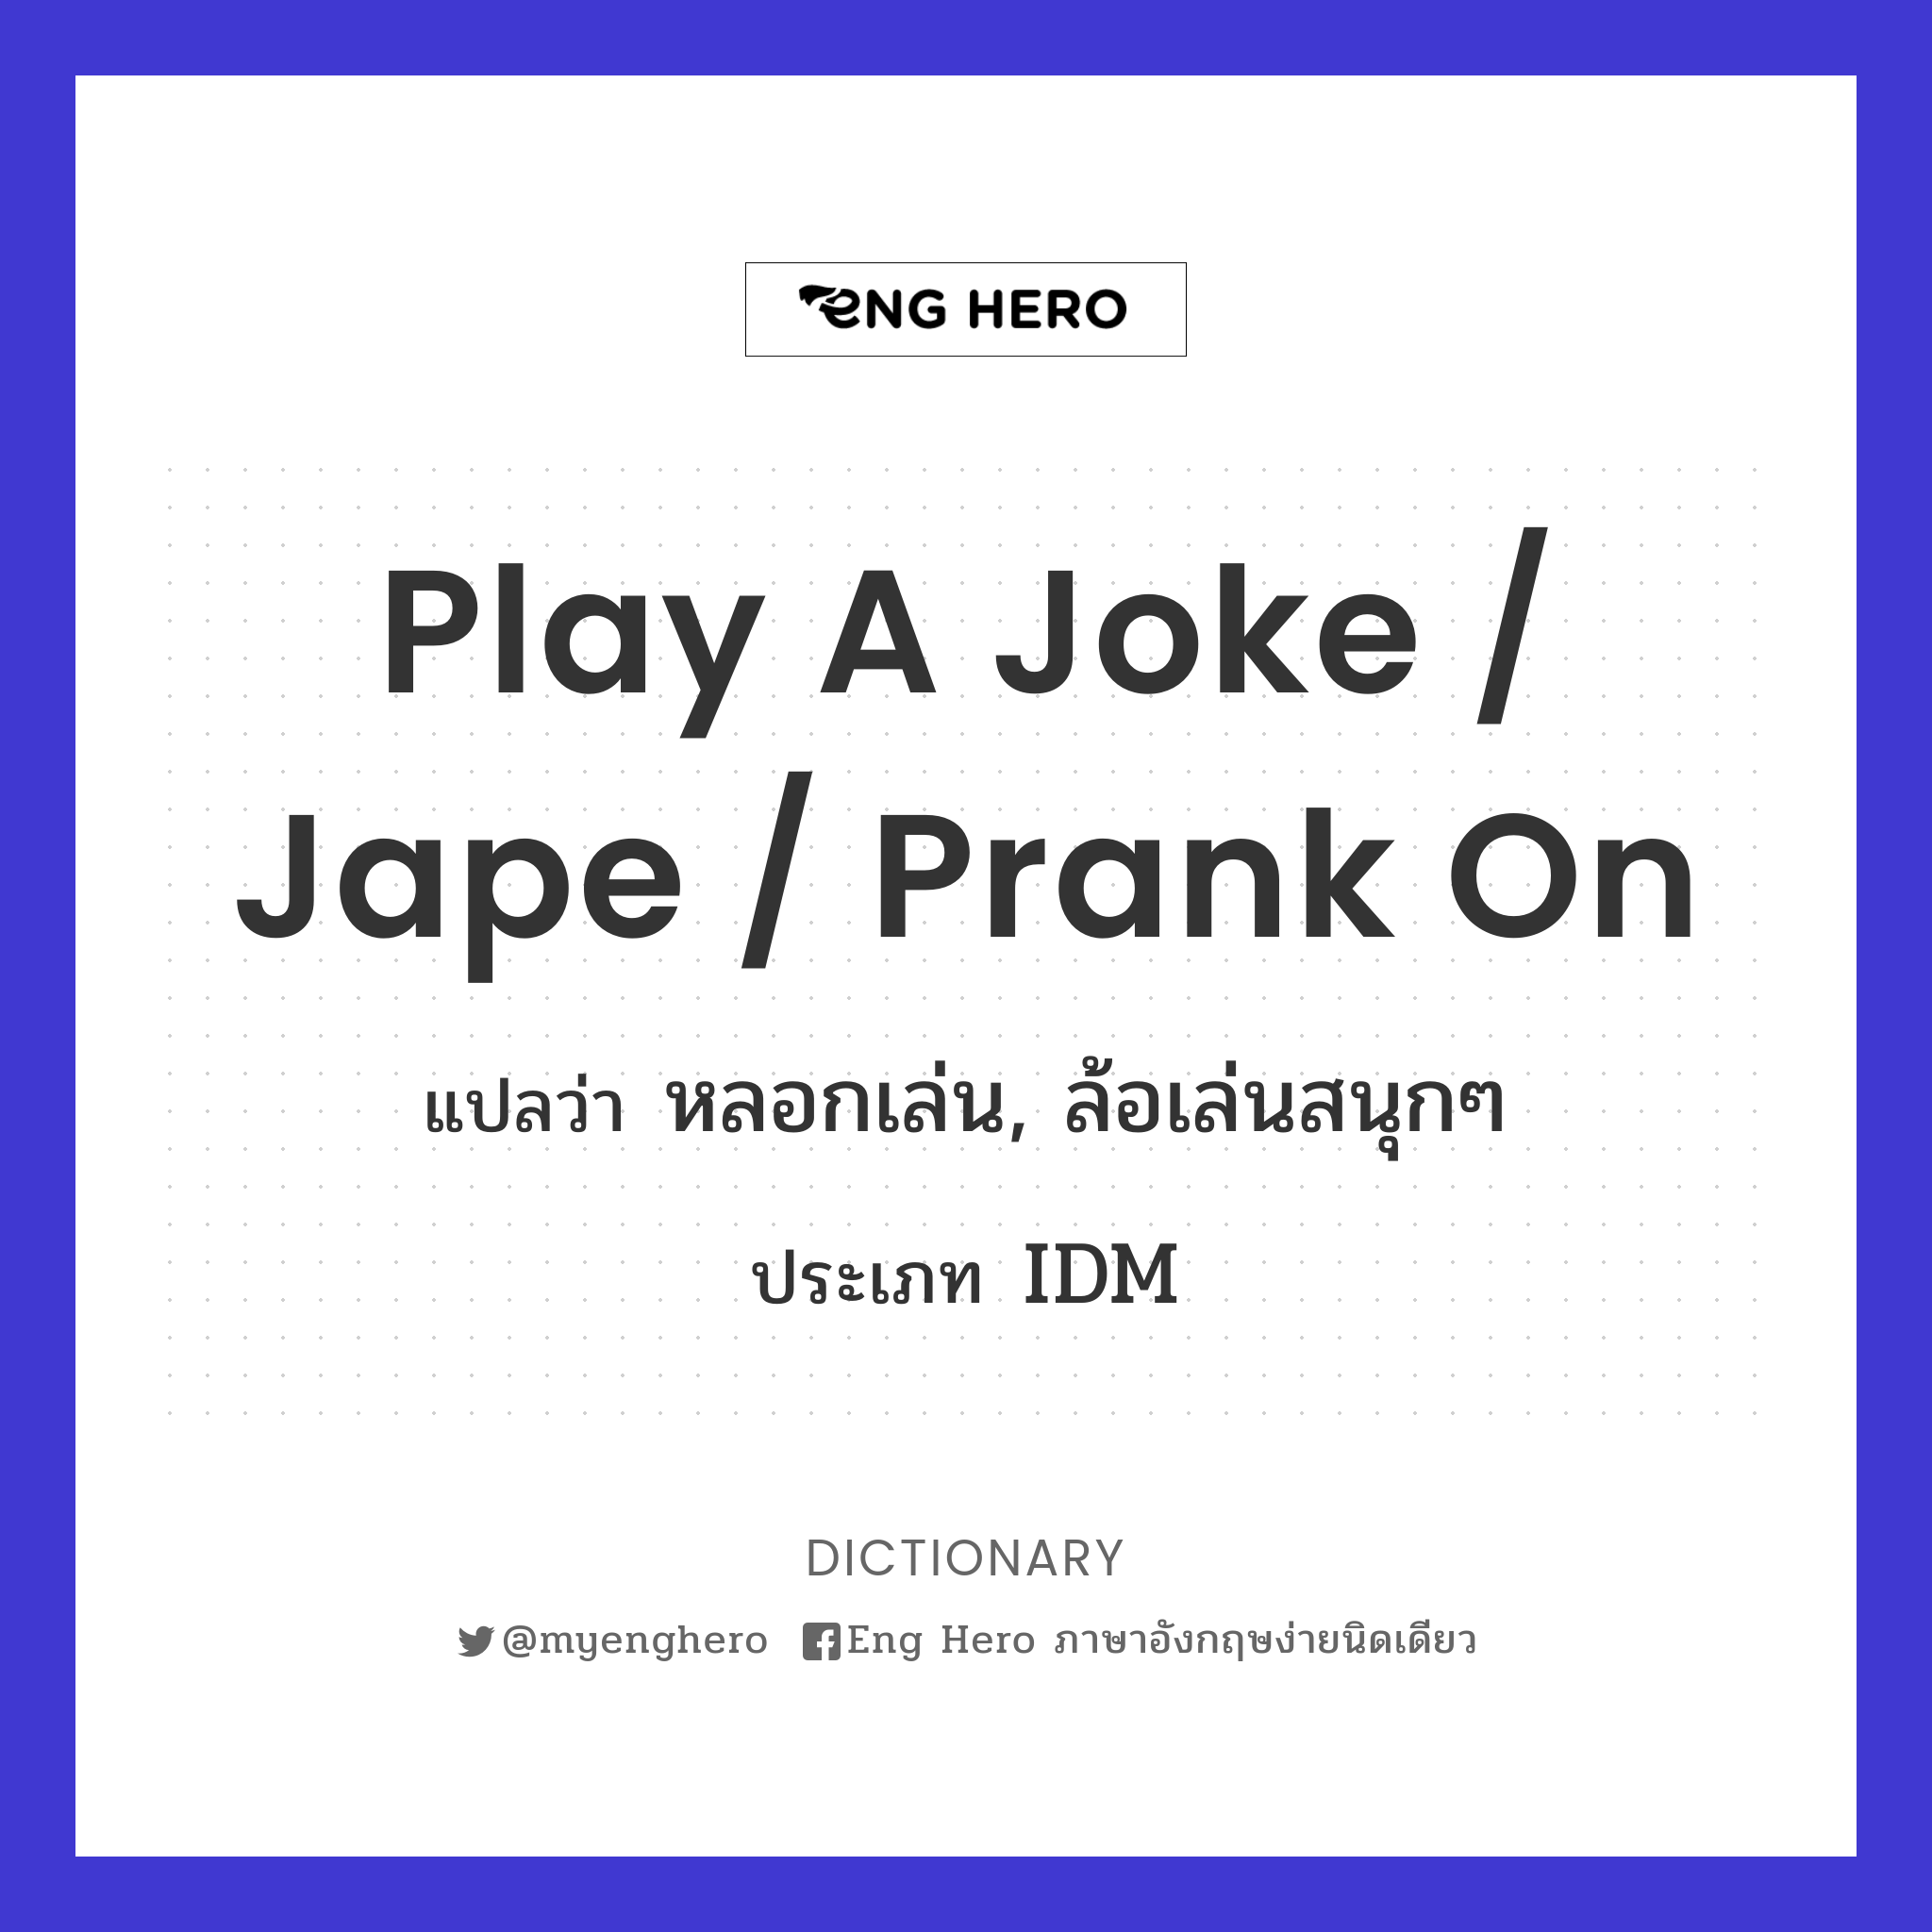 play a joke / jape / prank on